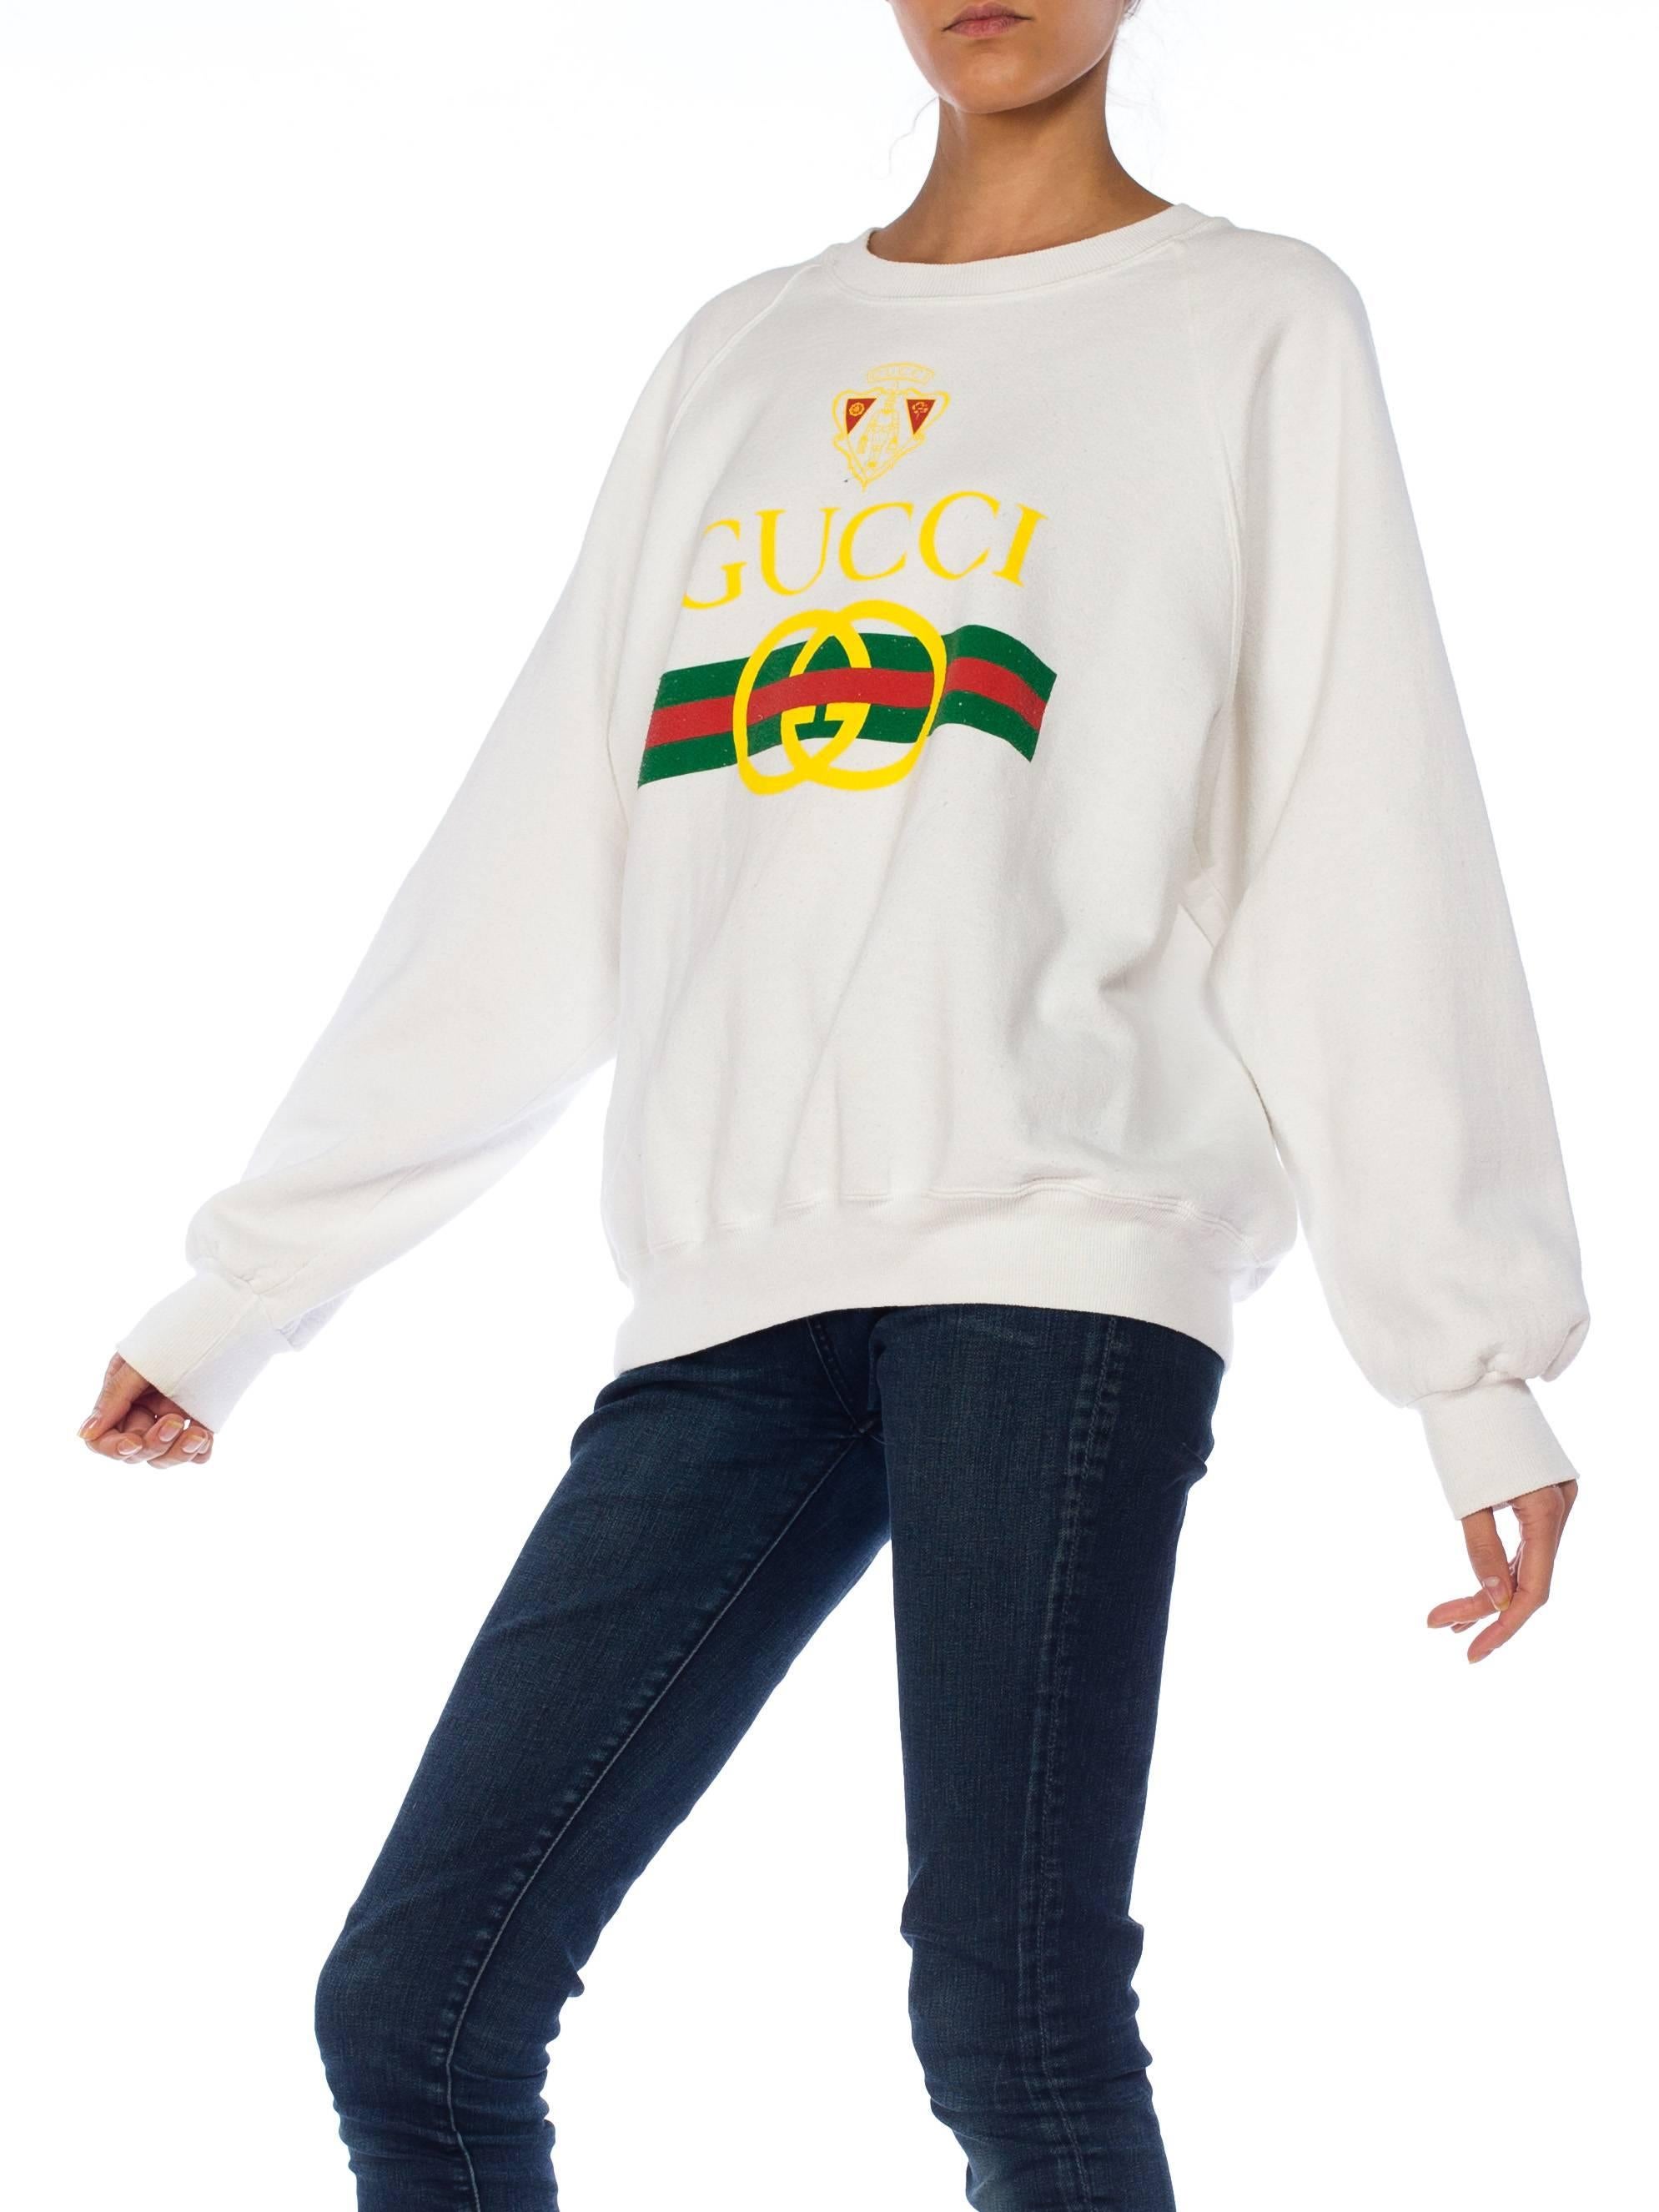 Trendy and Fake Gucci bootleg 80s rare Sweatshirt